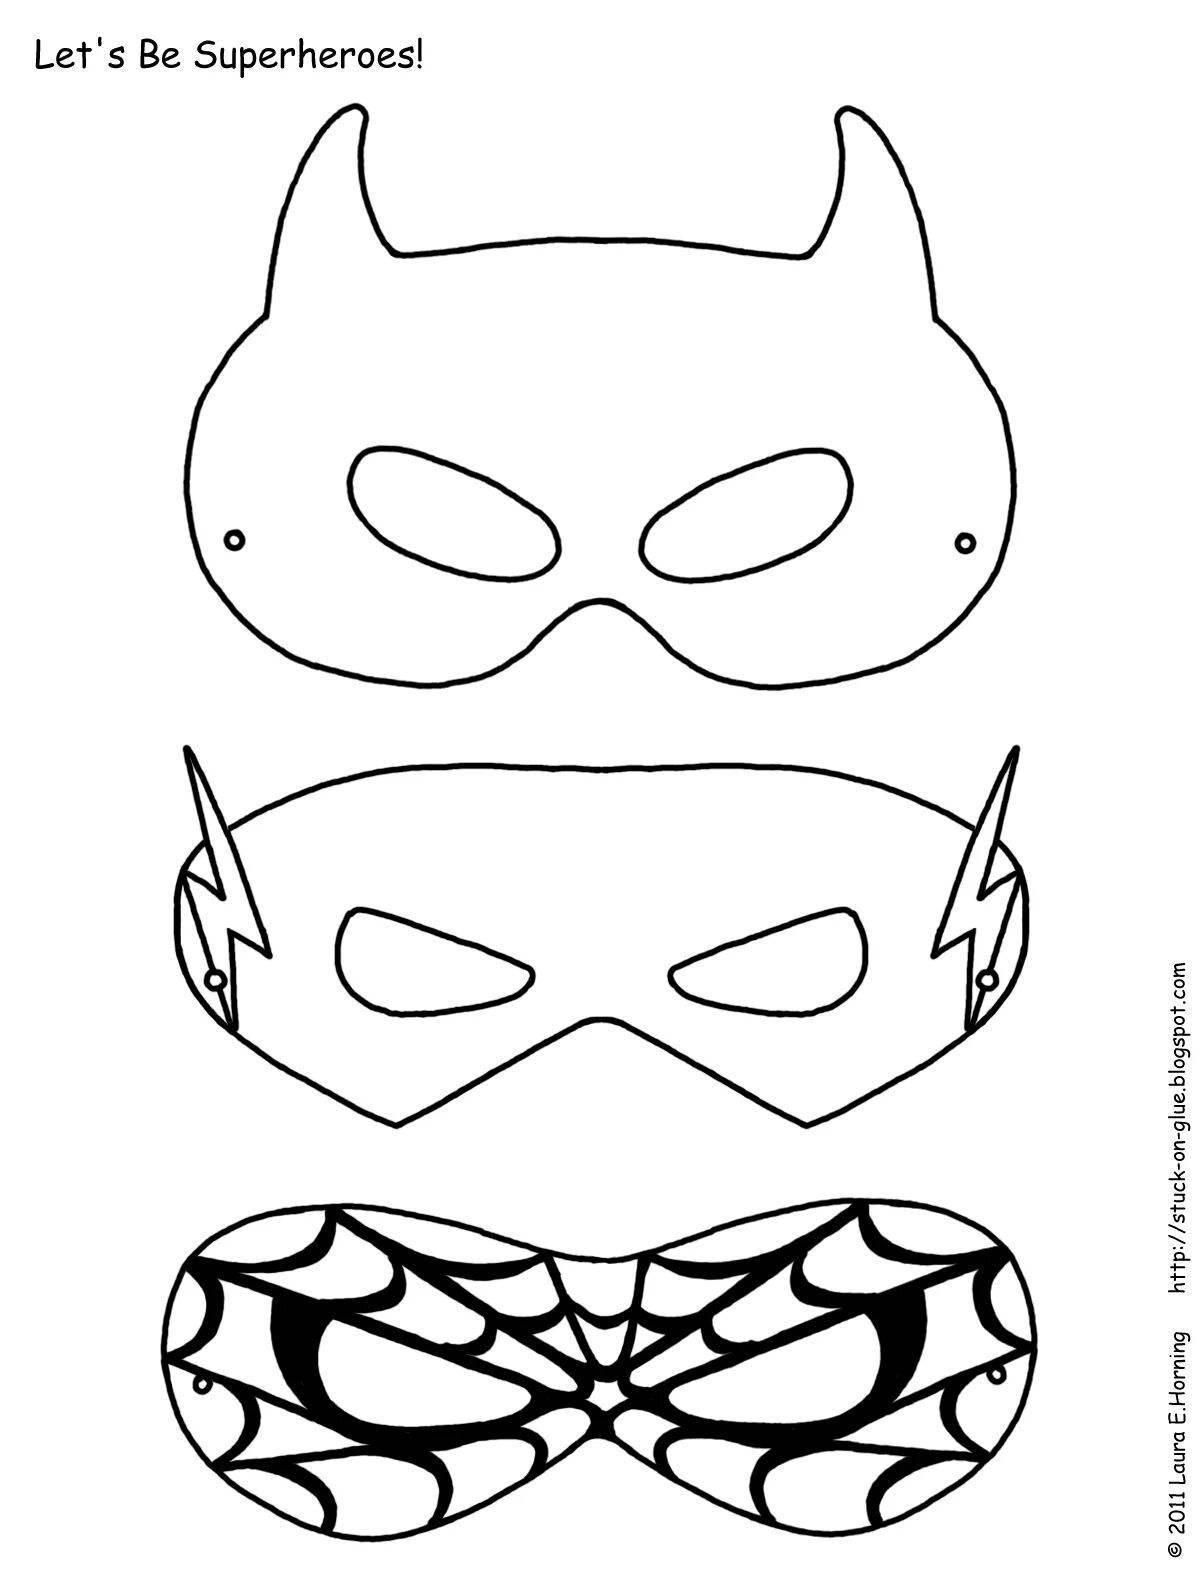 Coloring page adorable superhero mask